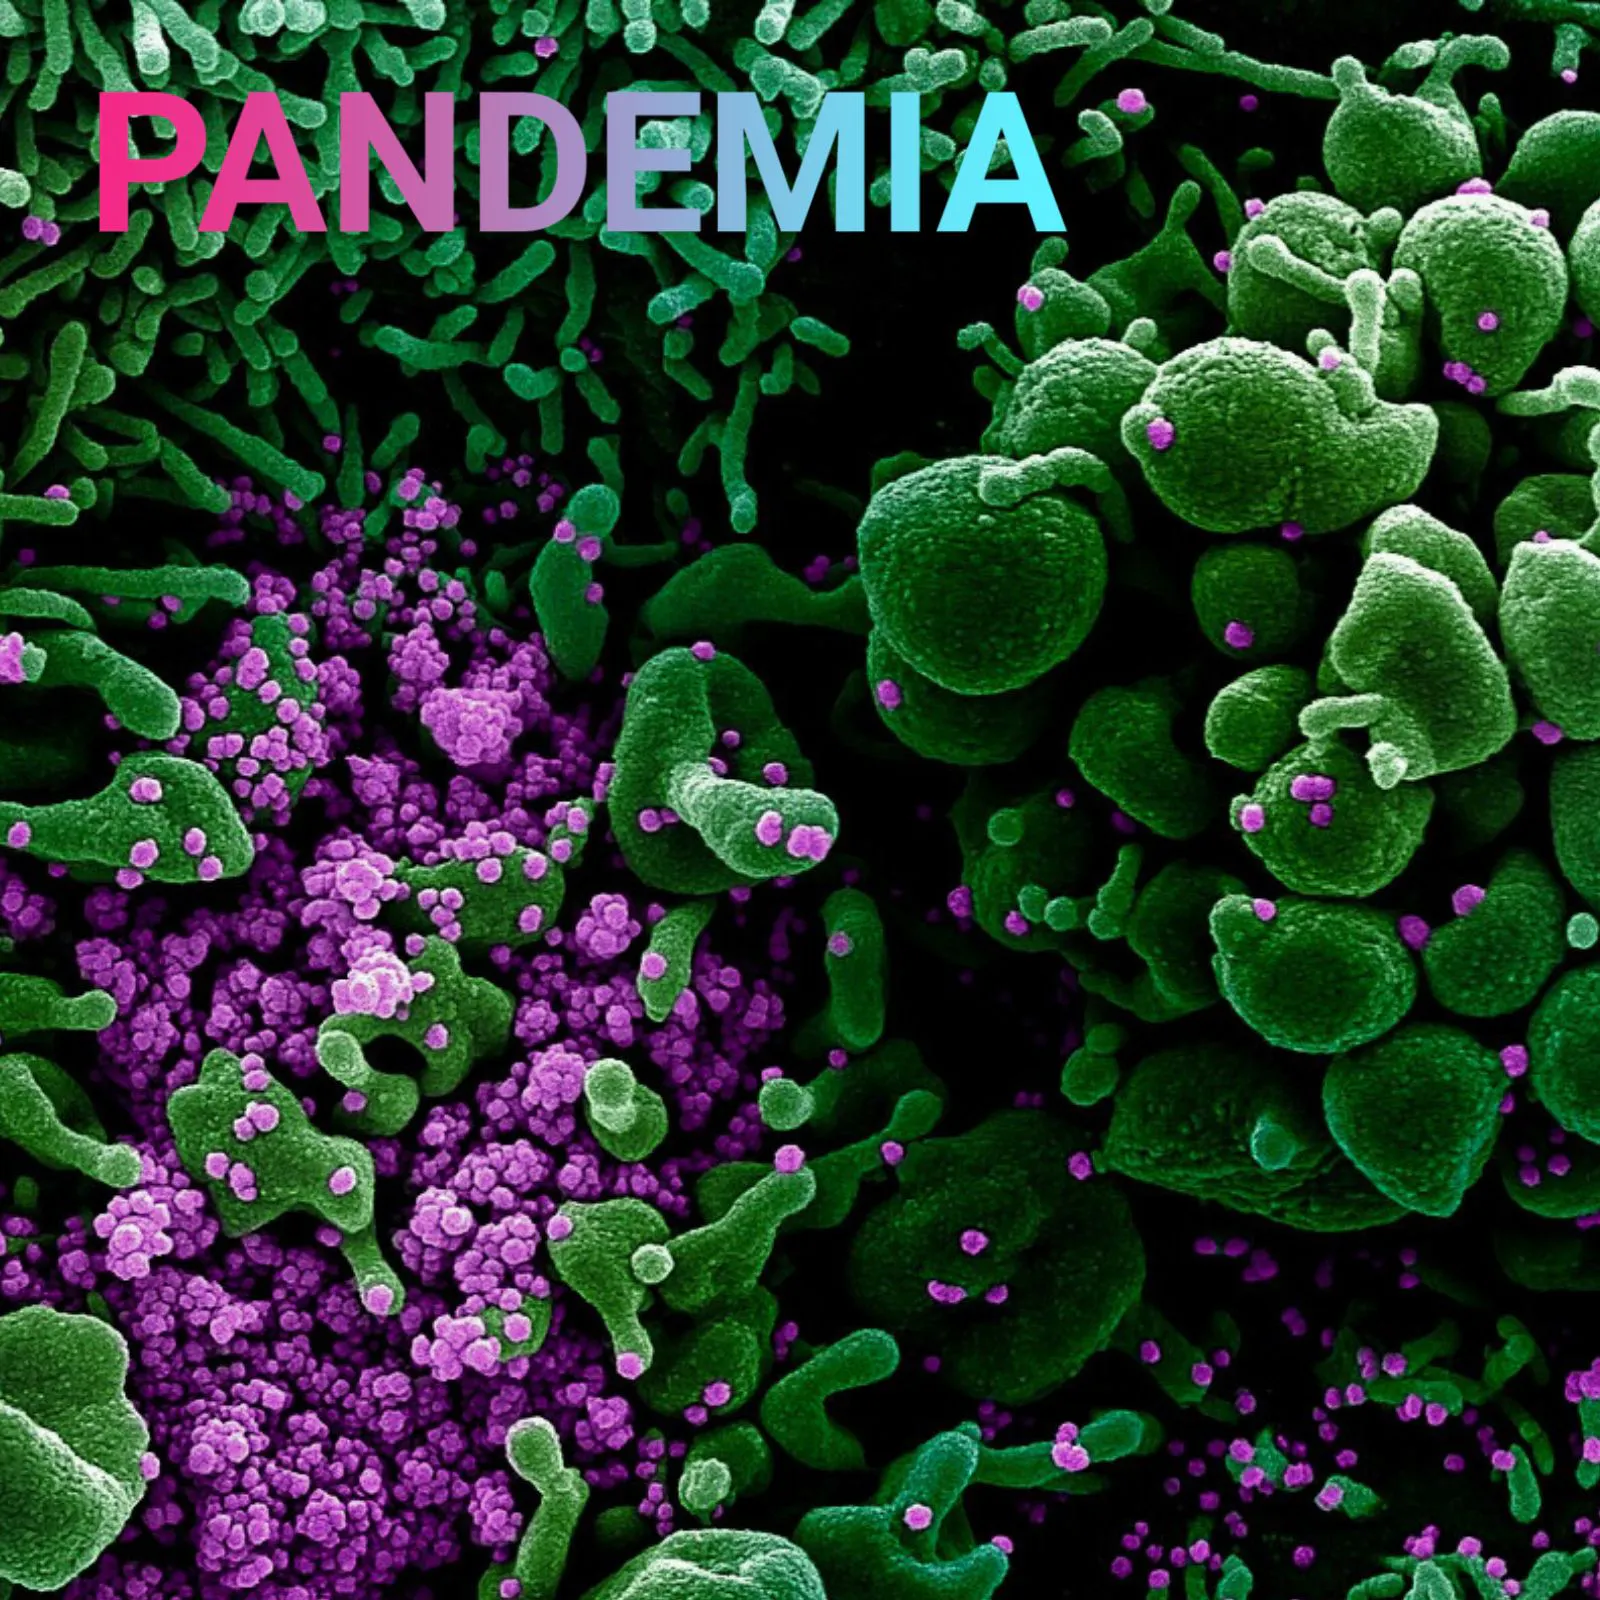 Pandemia Sars CoV2 Virus